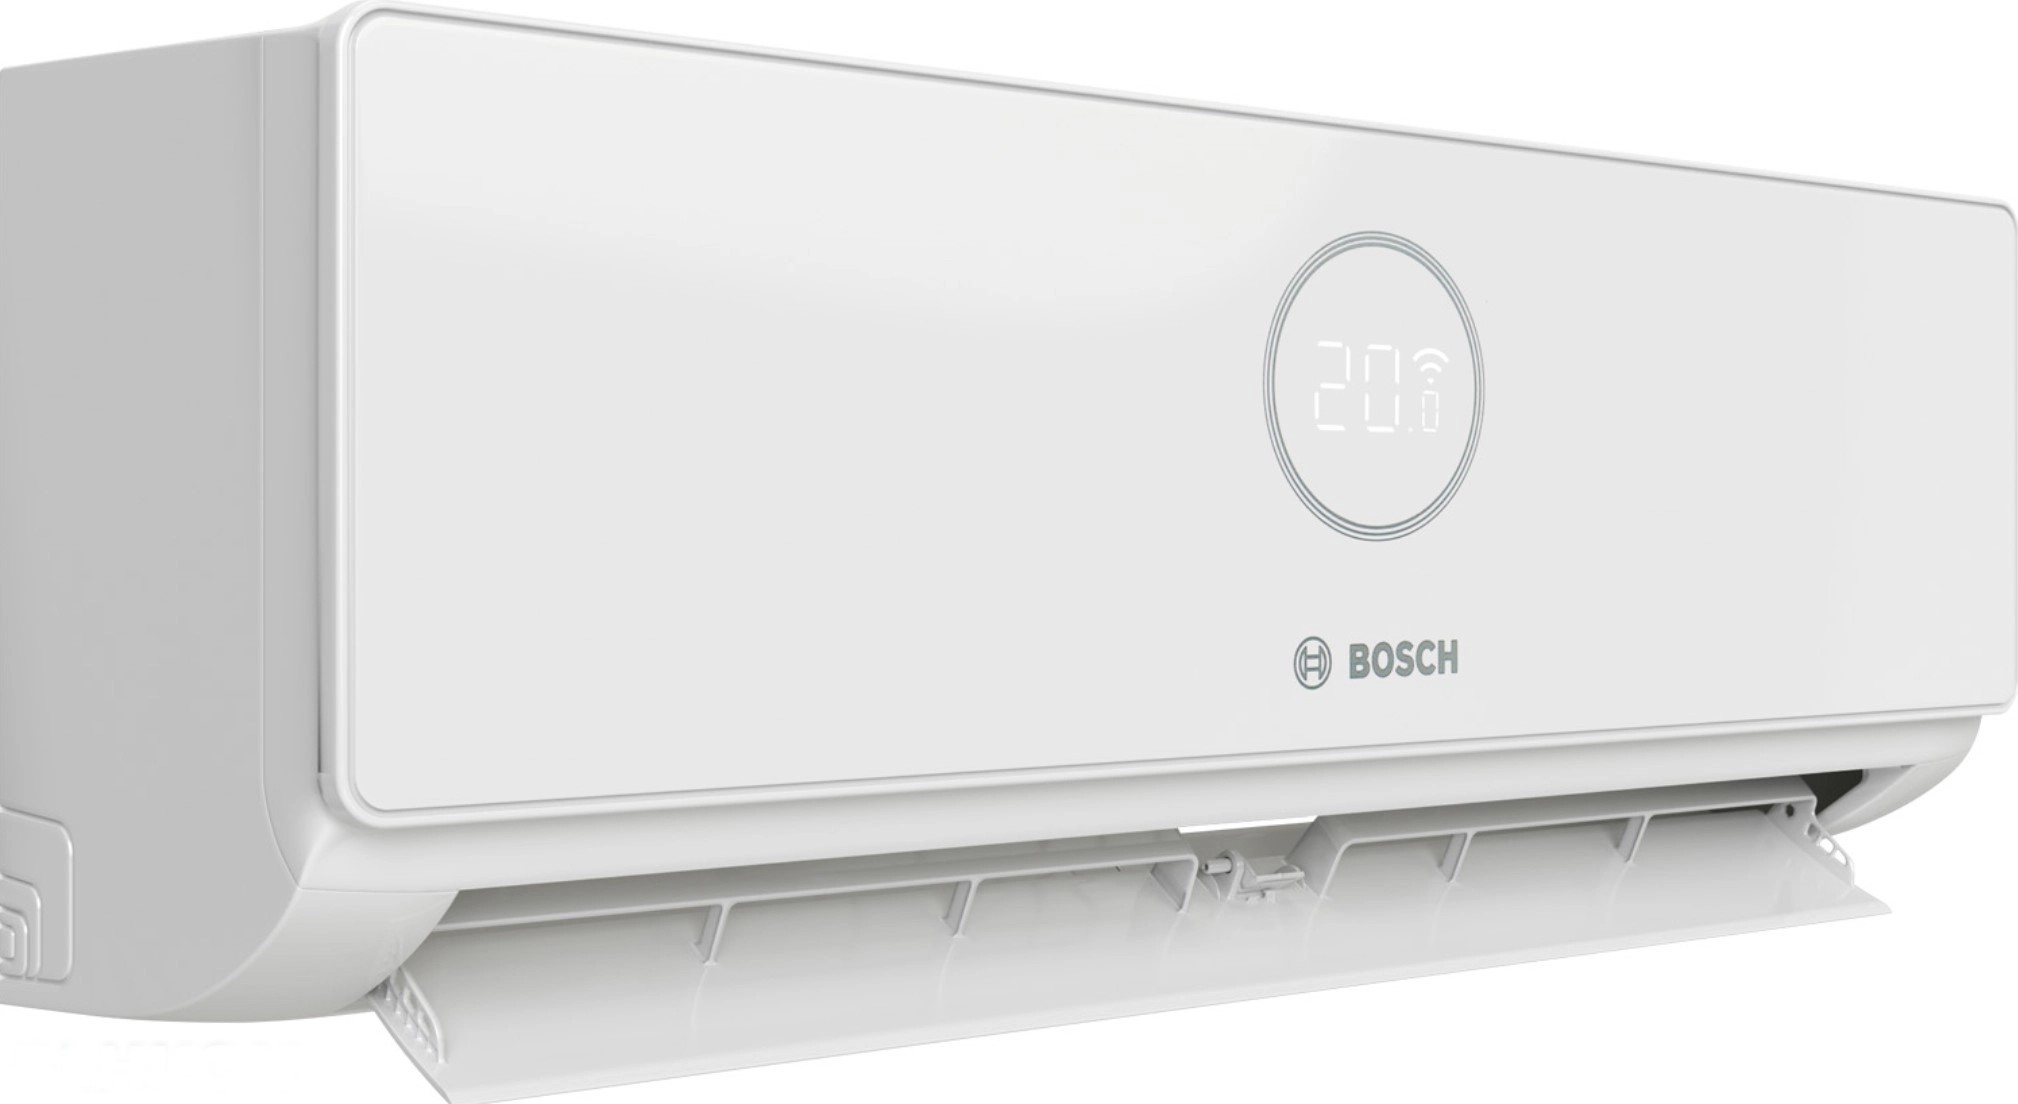 продаємо Bosch CL3000i W 20E 2,0 кВт в Україні - фото 4